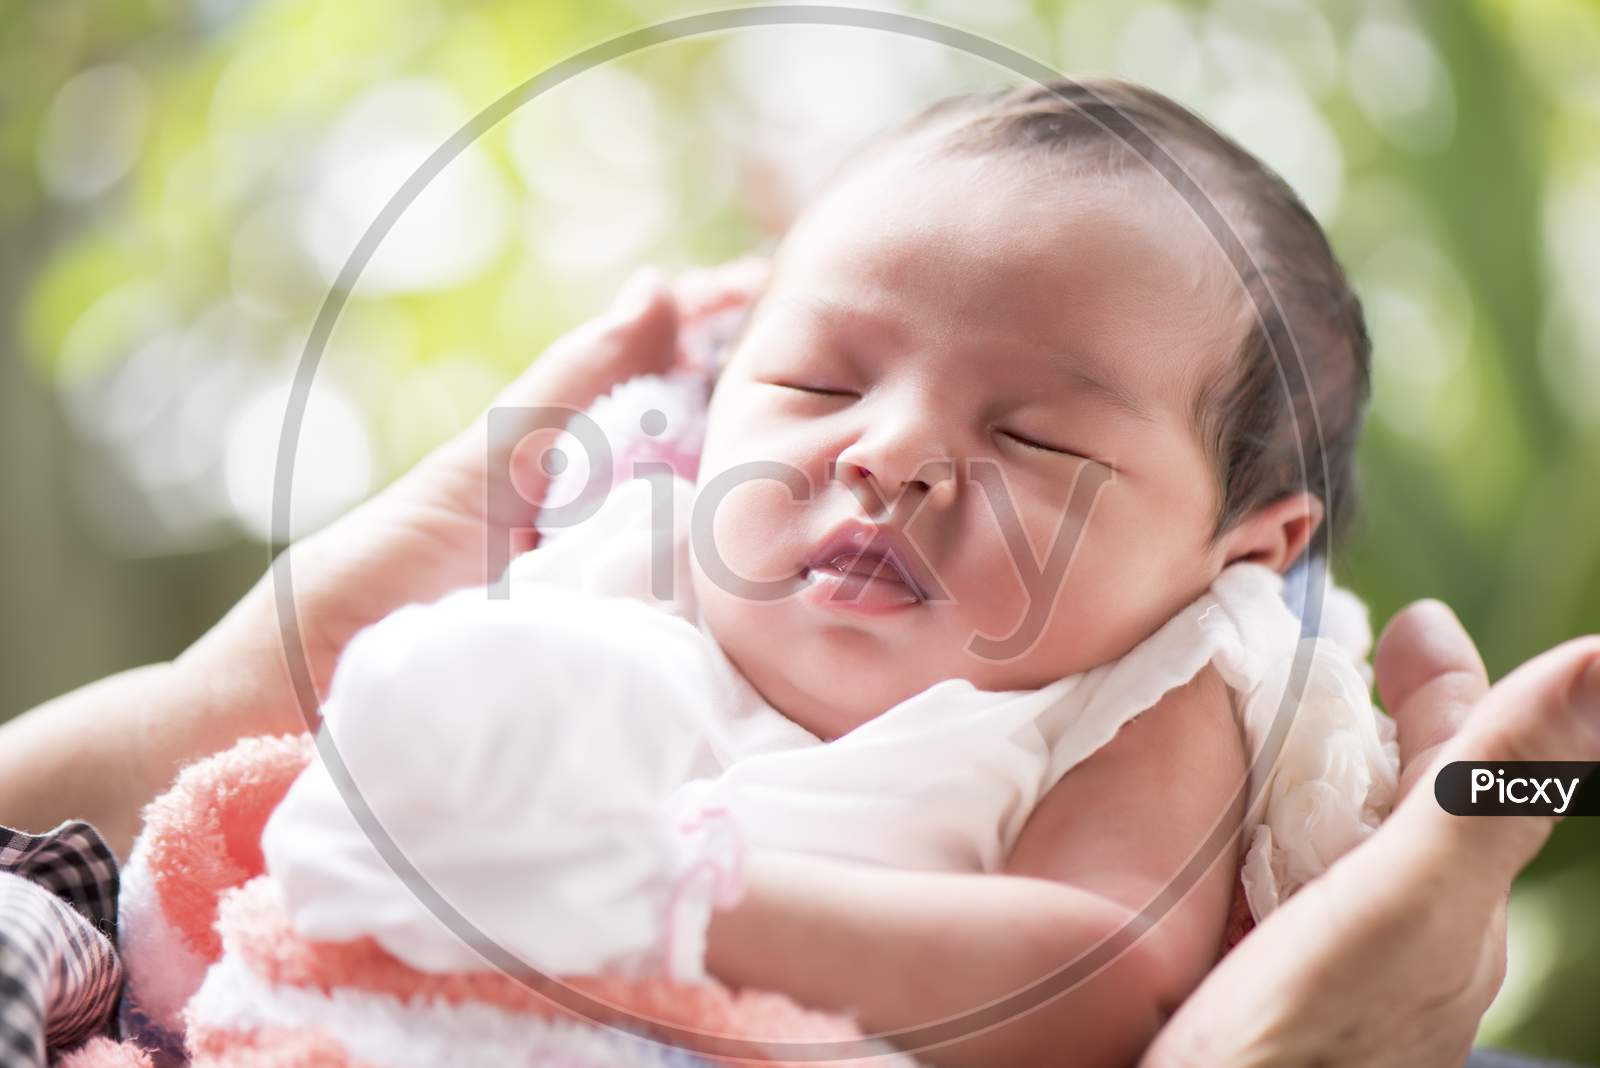 Newborn Baby Sleeping In Mother'S Hands, Selective Focus In Her Eyes, Family Concept